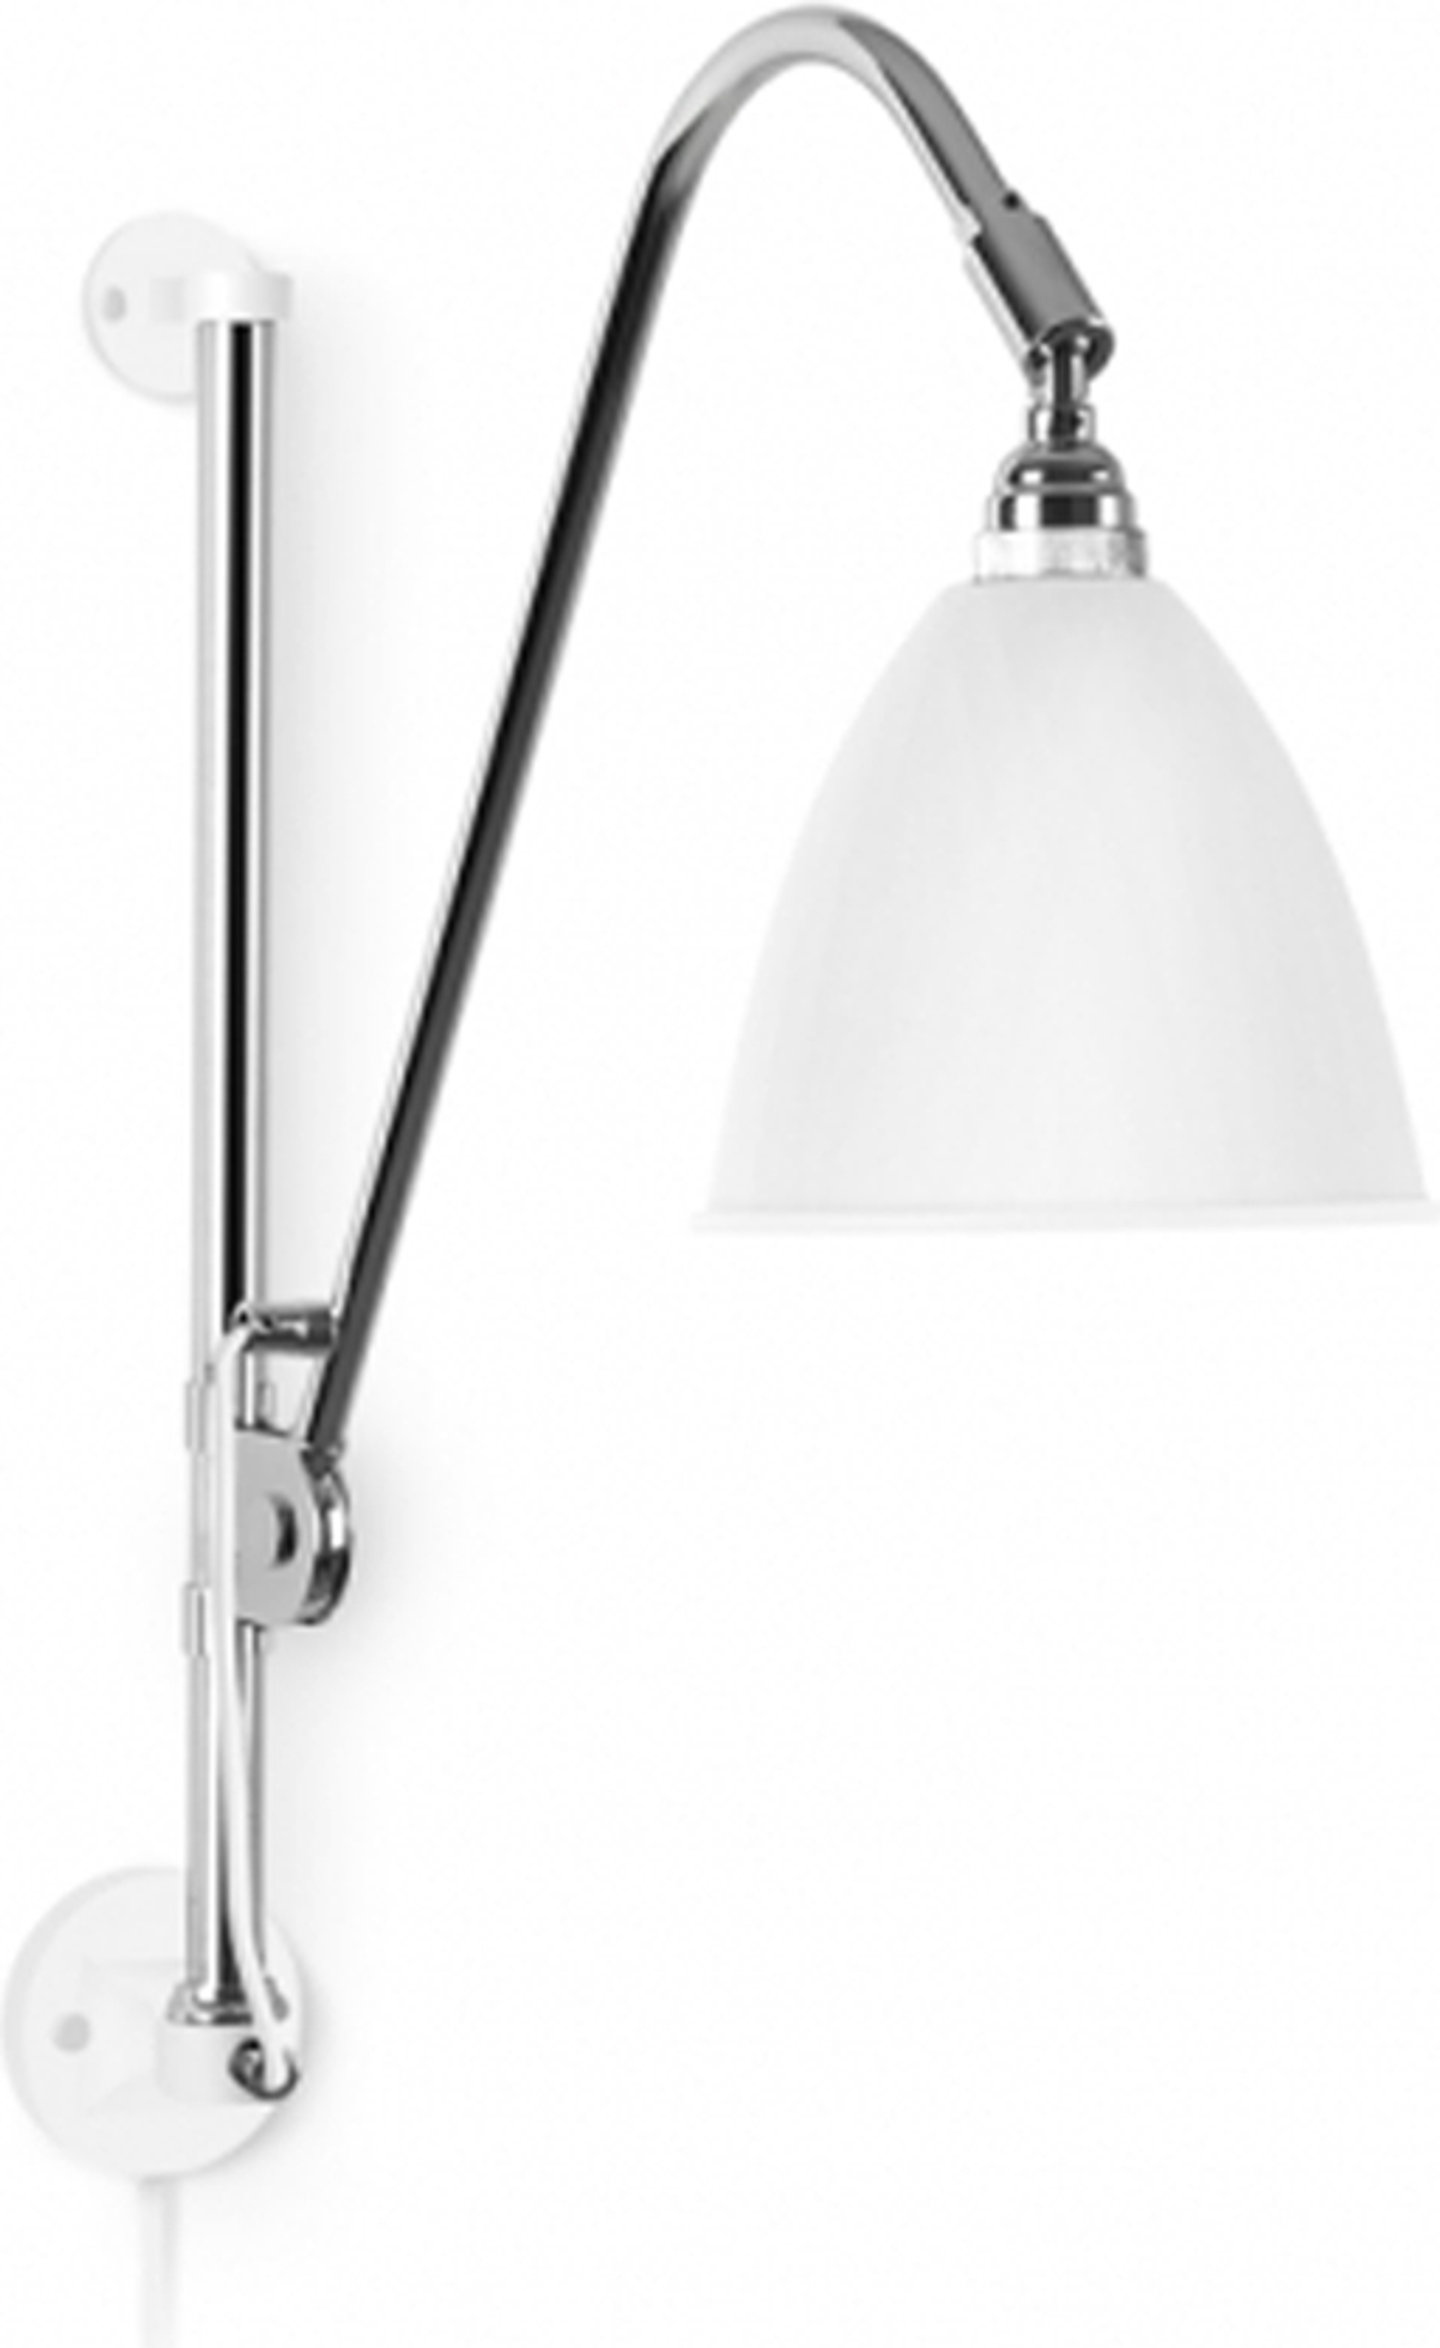 Bestlite Style Wall Lamp - BL5 White image.